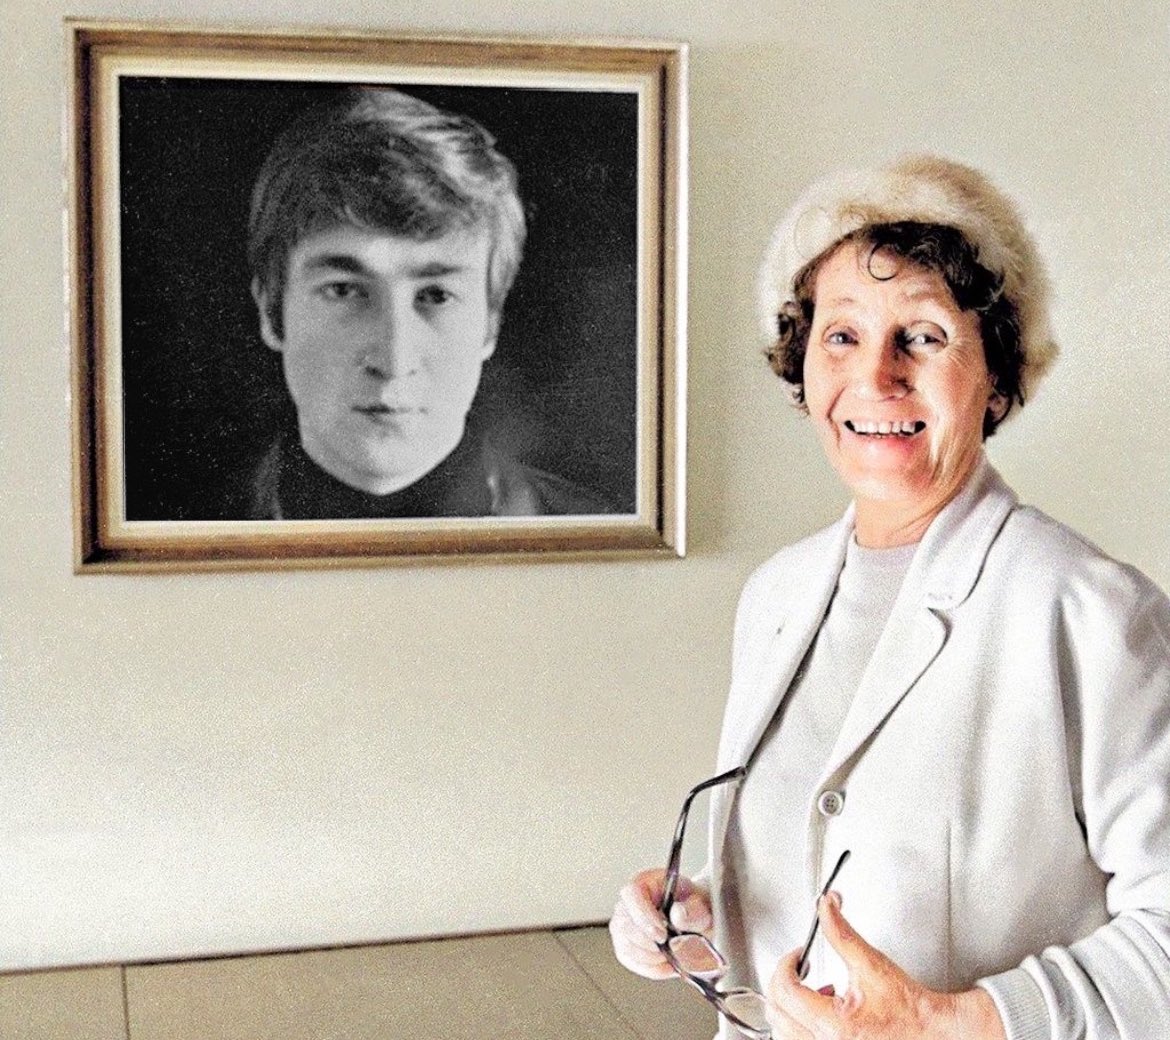 Lori G On Twitter: "Rt @Beatlesearth: John Lennon's Aunt Mimi Visiting An Art Gallery To See A Portrait Of Her Nephew (1968) Https://T.co/Bbij2Enlxo" / Twitter